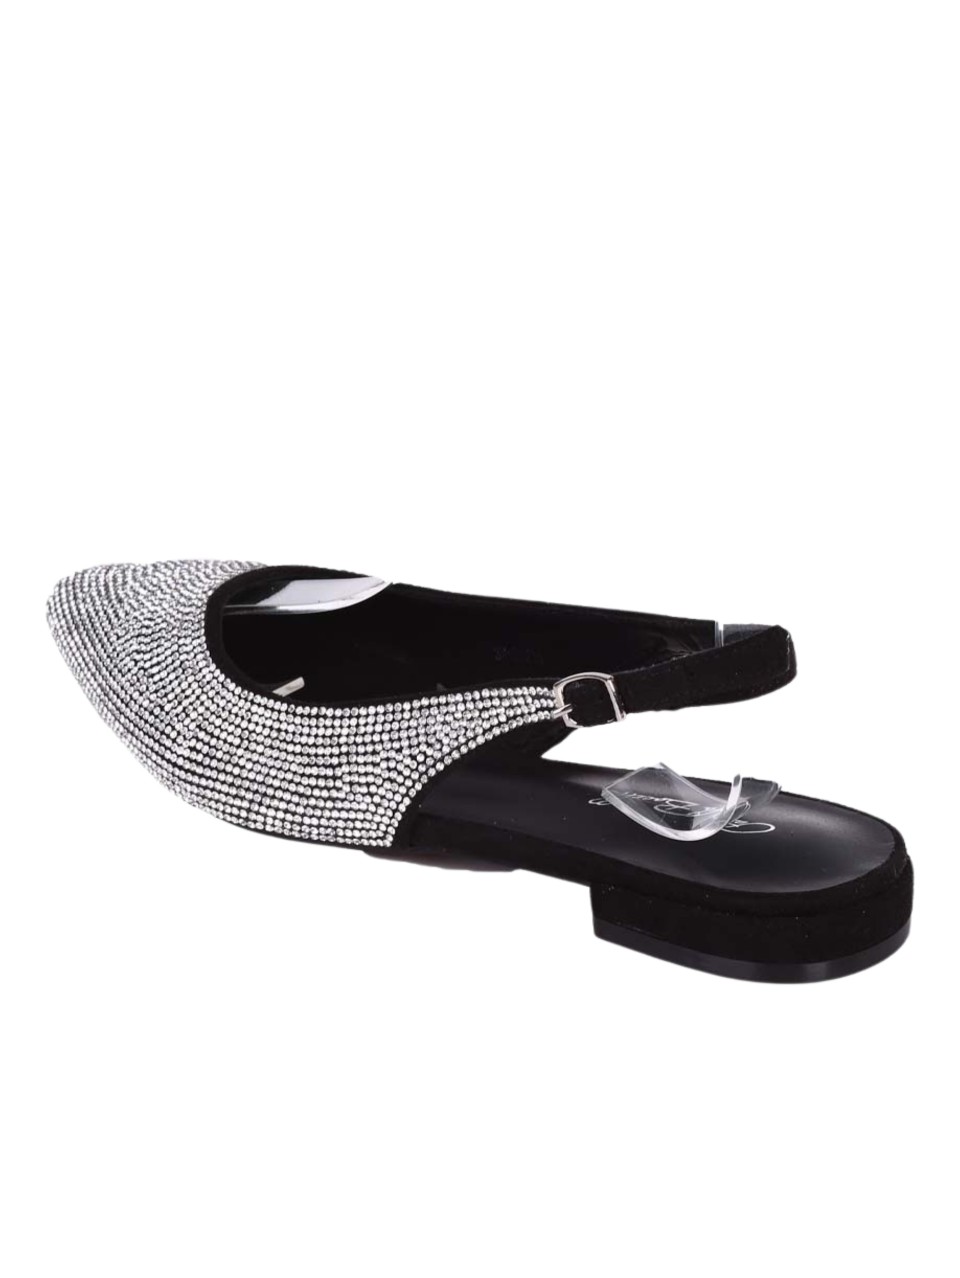 Дамски равни обувки, обсипани с декоративни камъни 3H-24210 black